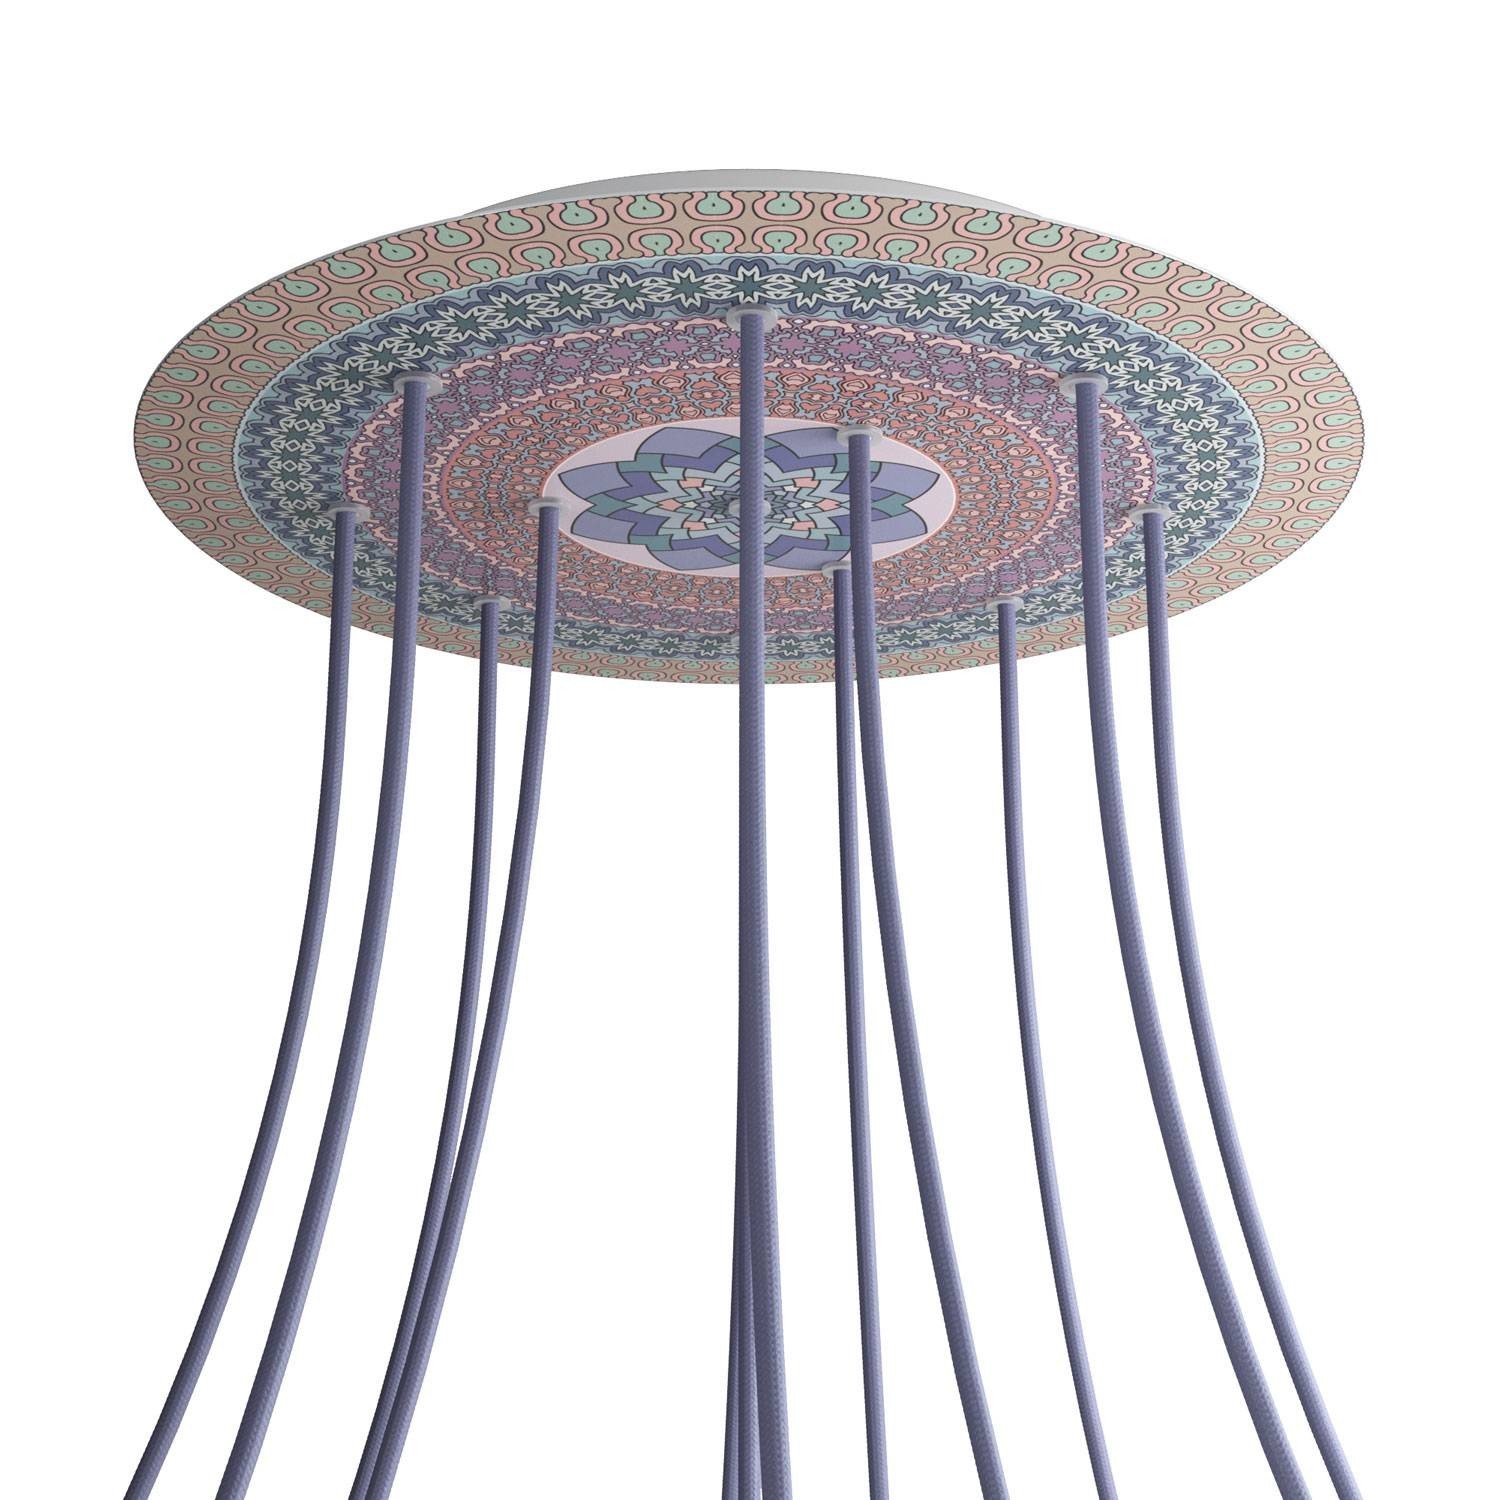 Velika okrugla dekoracija za stropnu rozetu 400 mm - Rose-One sistem s 12 rupa i 4 bočne rupe - PROMO